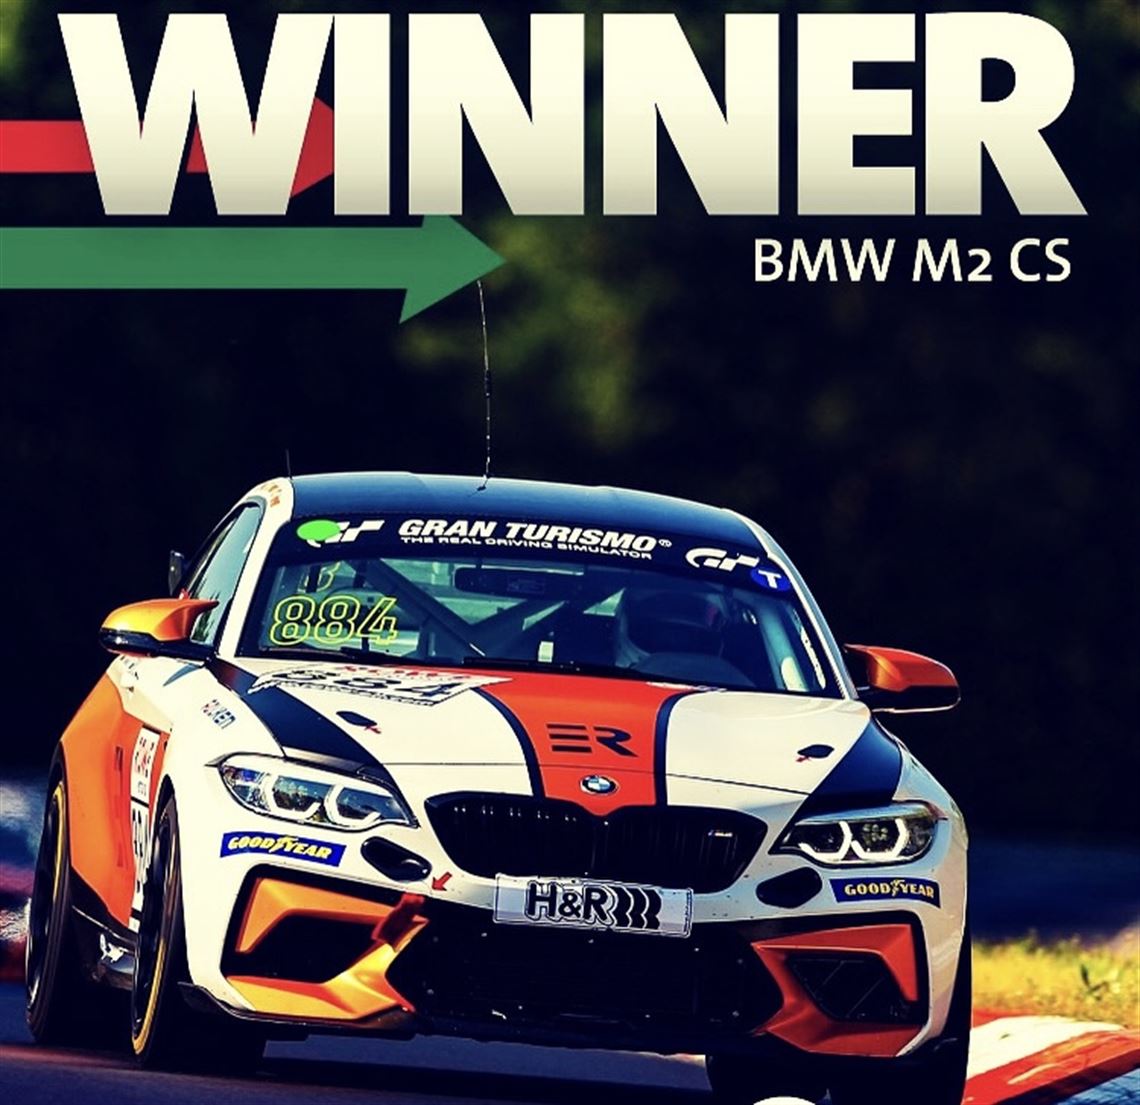 bmw-m2-cs-racing-450-hp